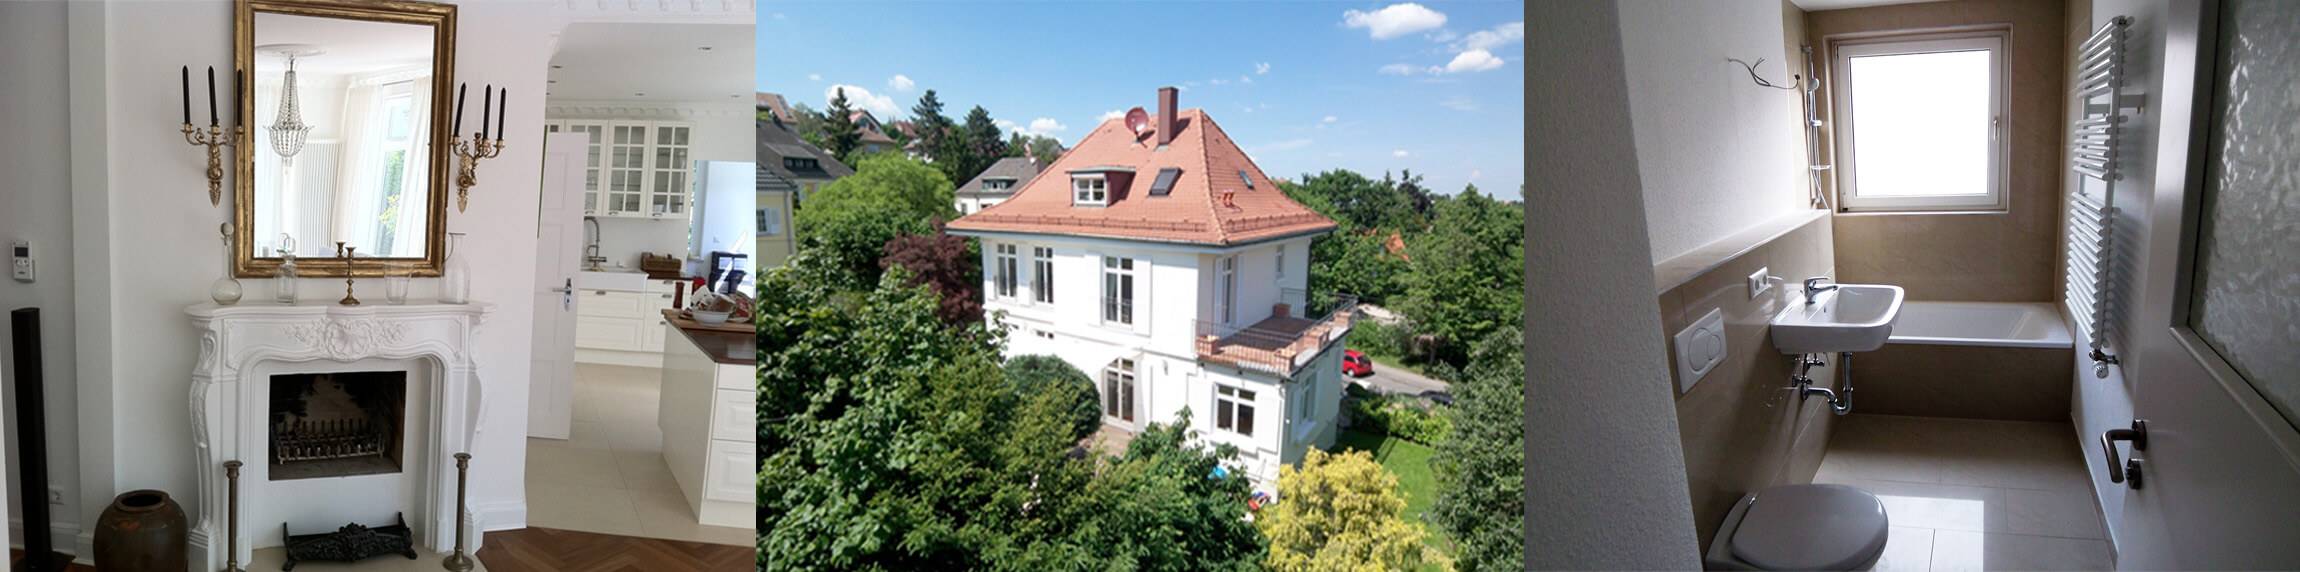 Sanierungen Immobilienmakler Stuttgart